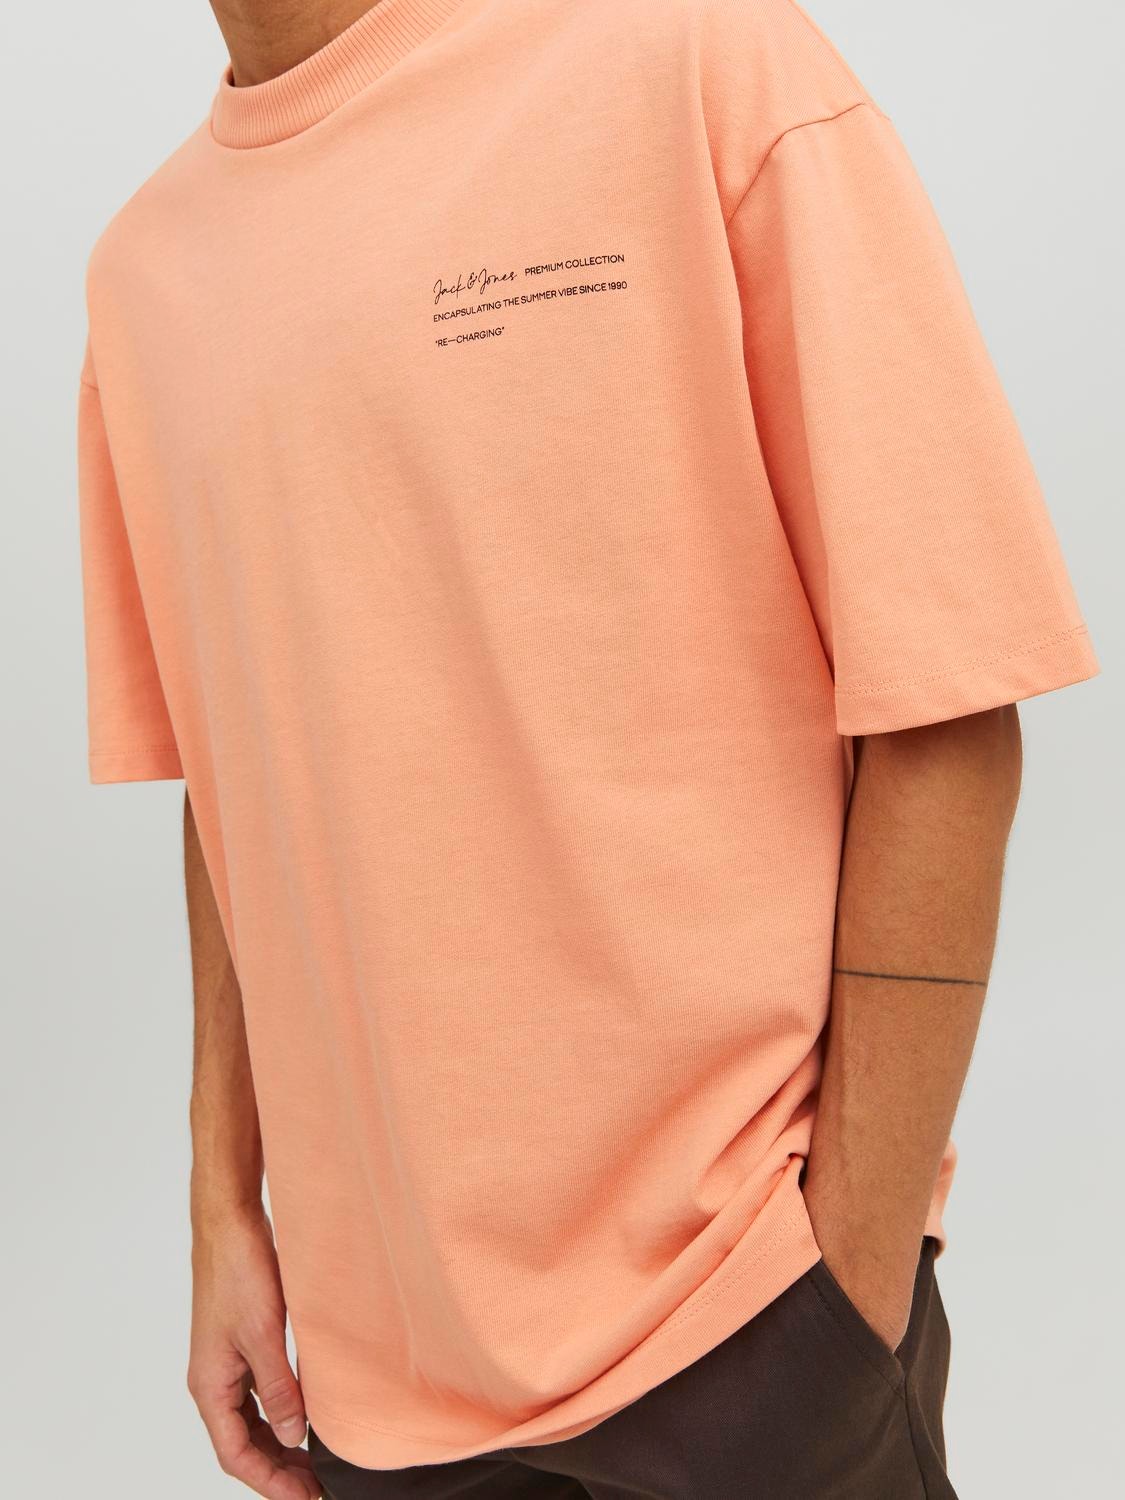 Jack & Jones Camiseta Estampado Cuello redondo -Shrimp - 12236394